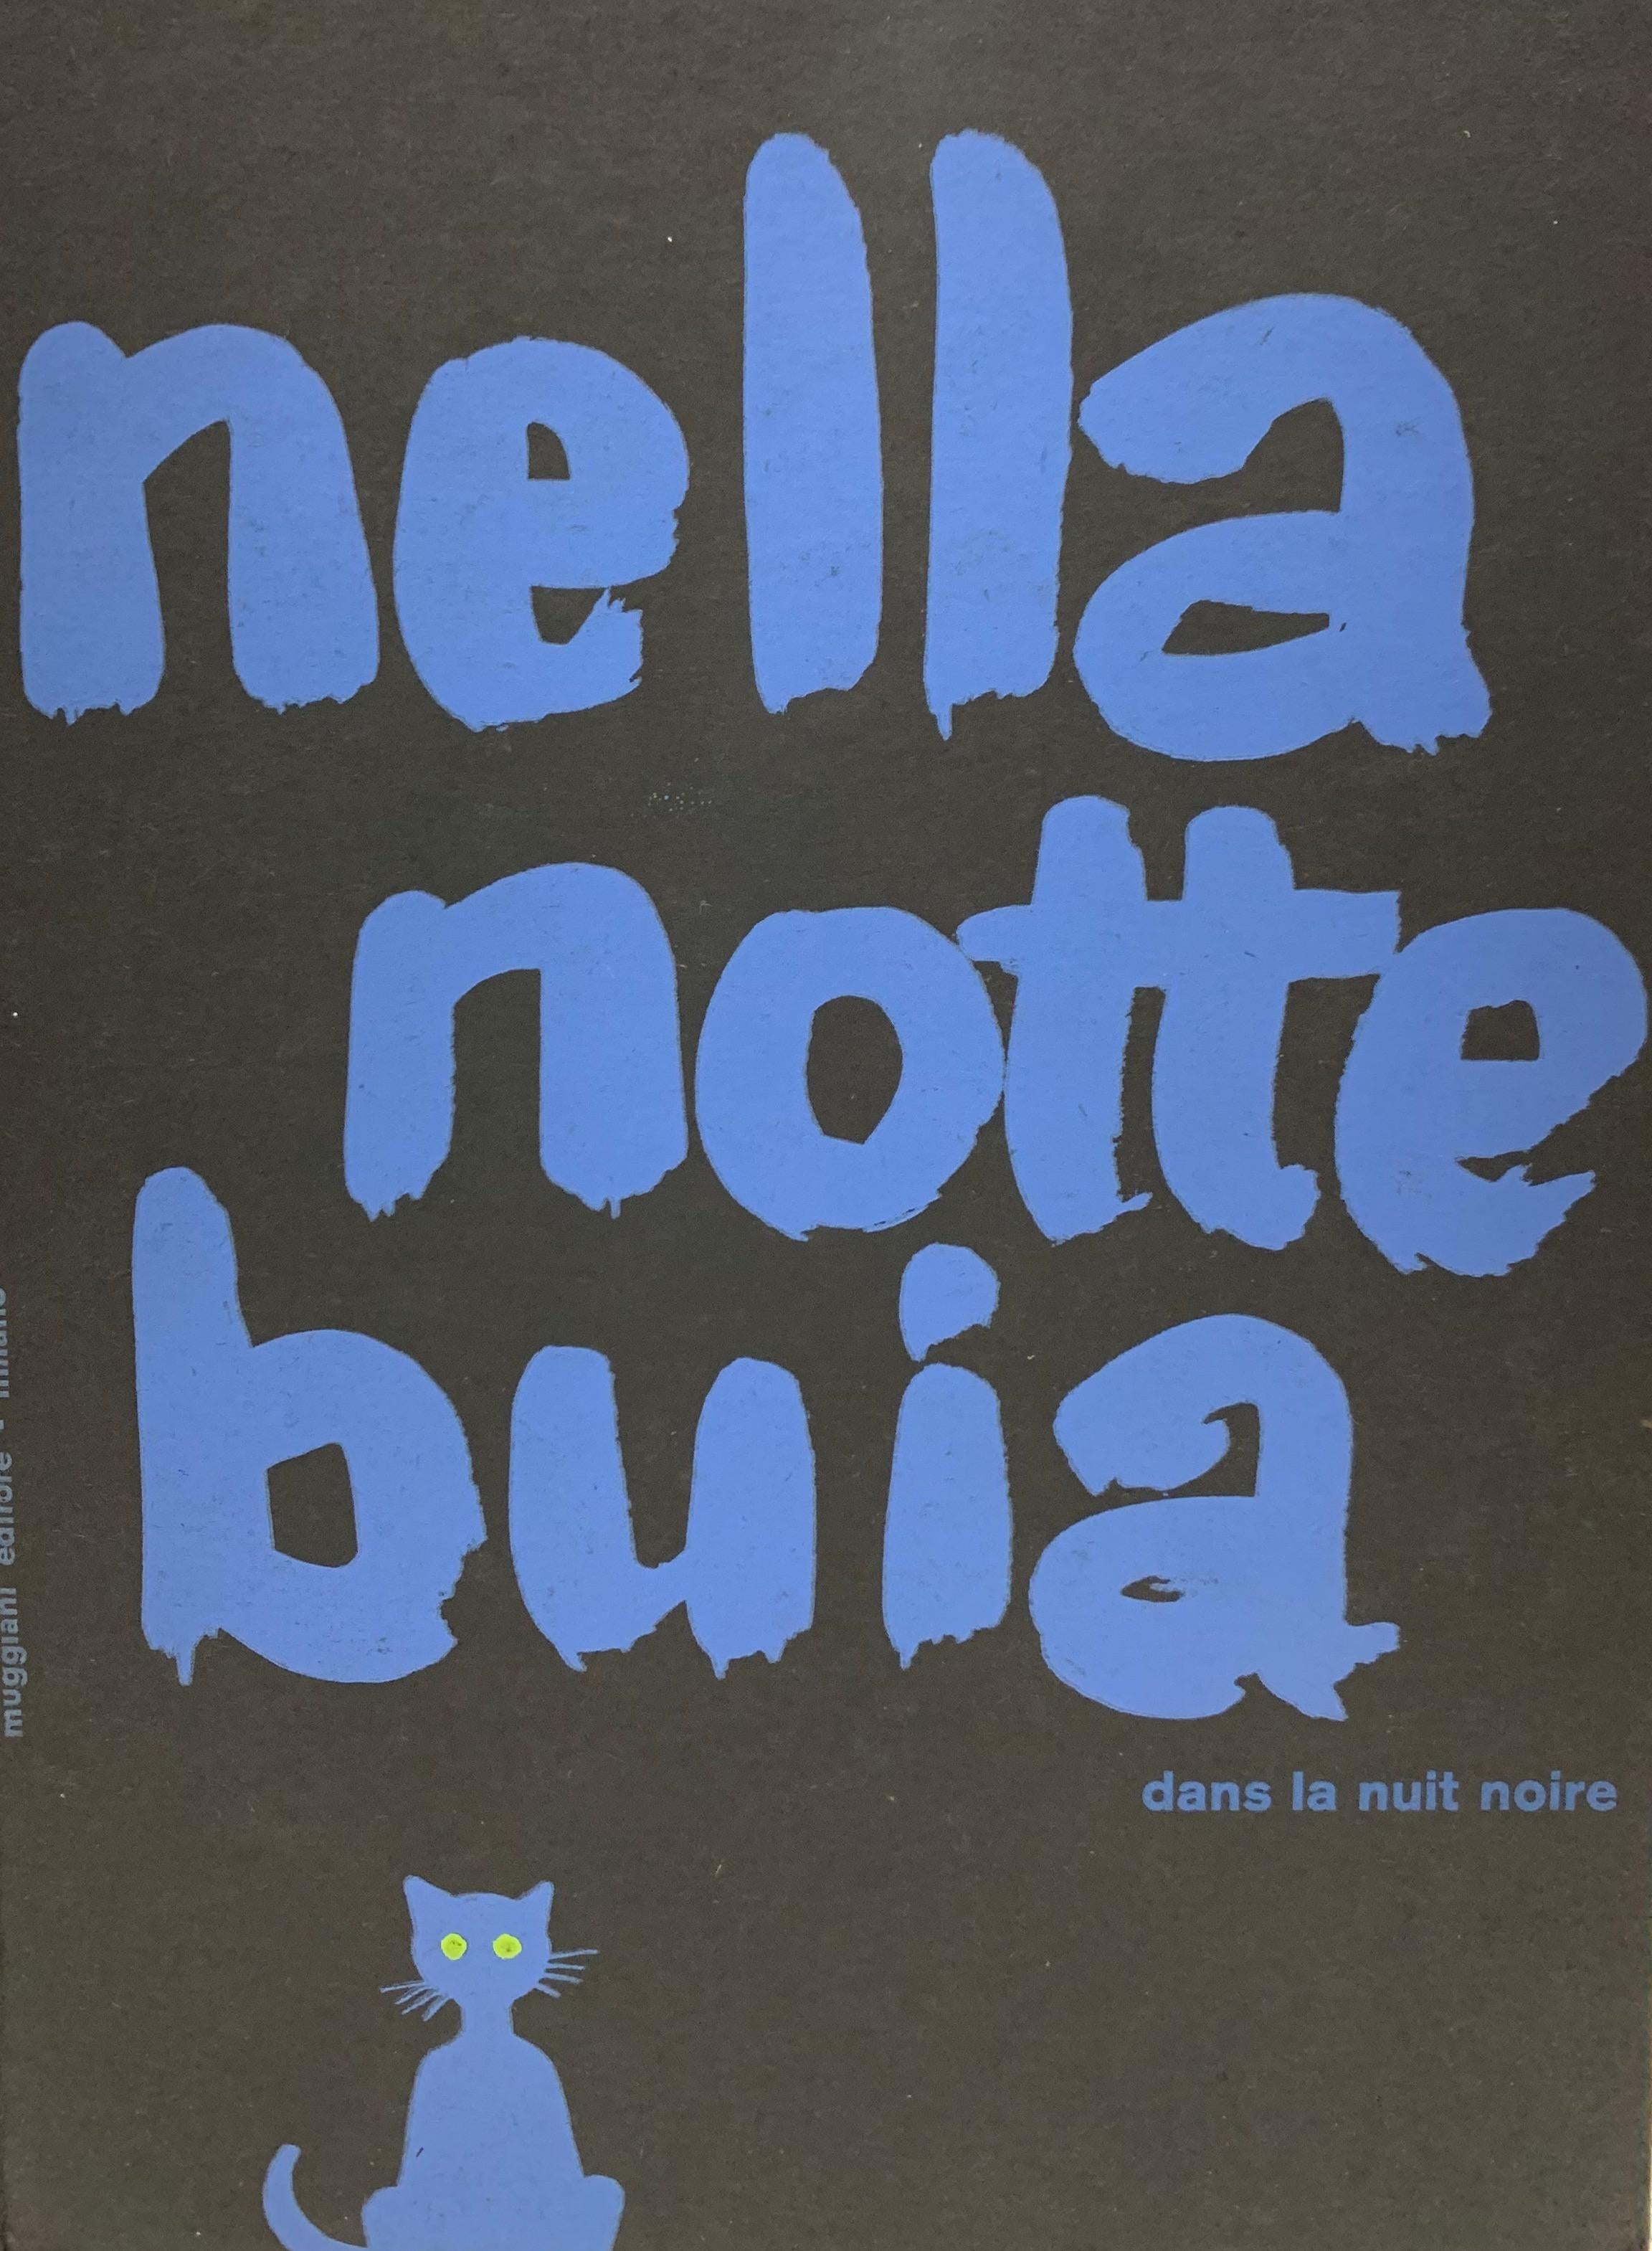 Bruno Munari Animal Print - Nella Notte Buia / dans la nuit noire